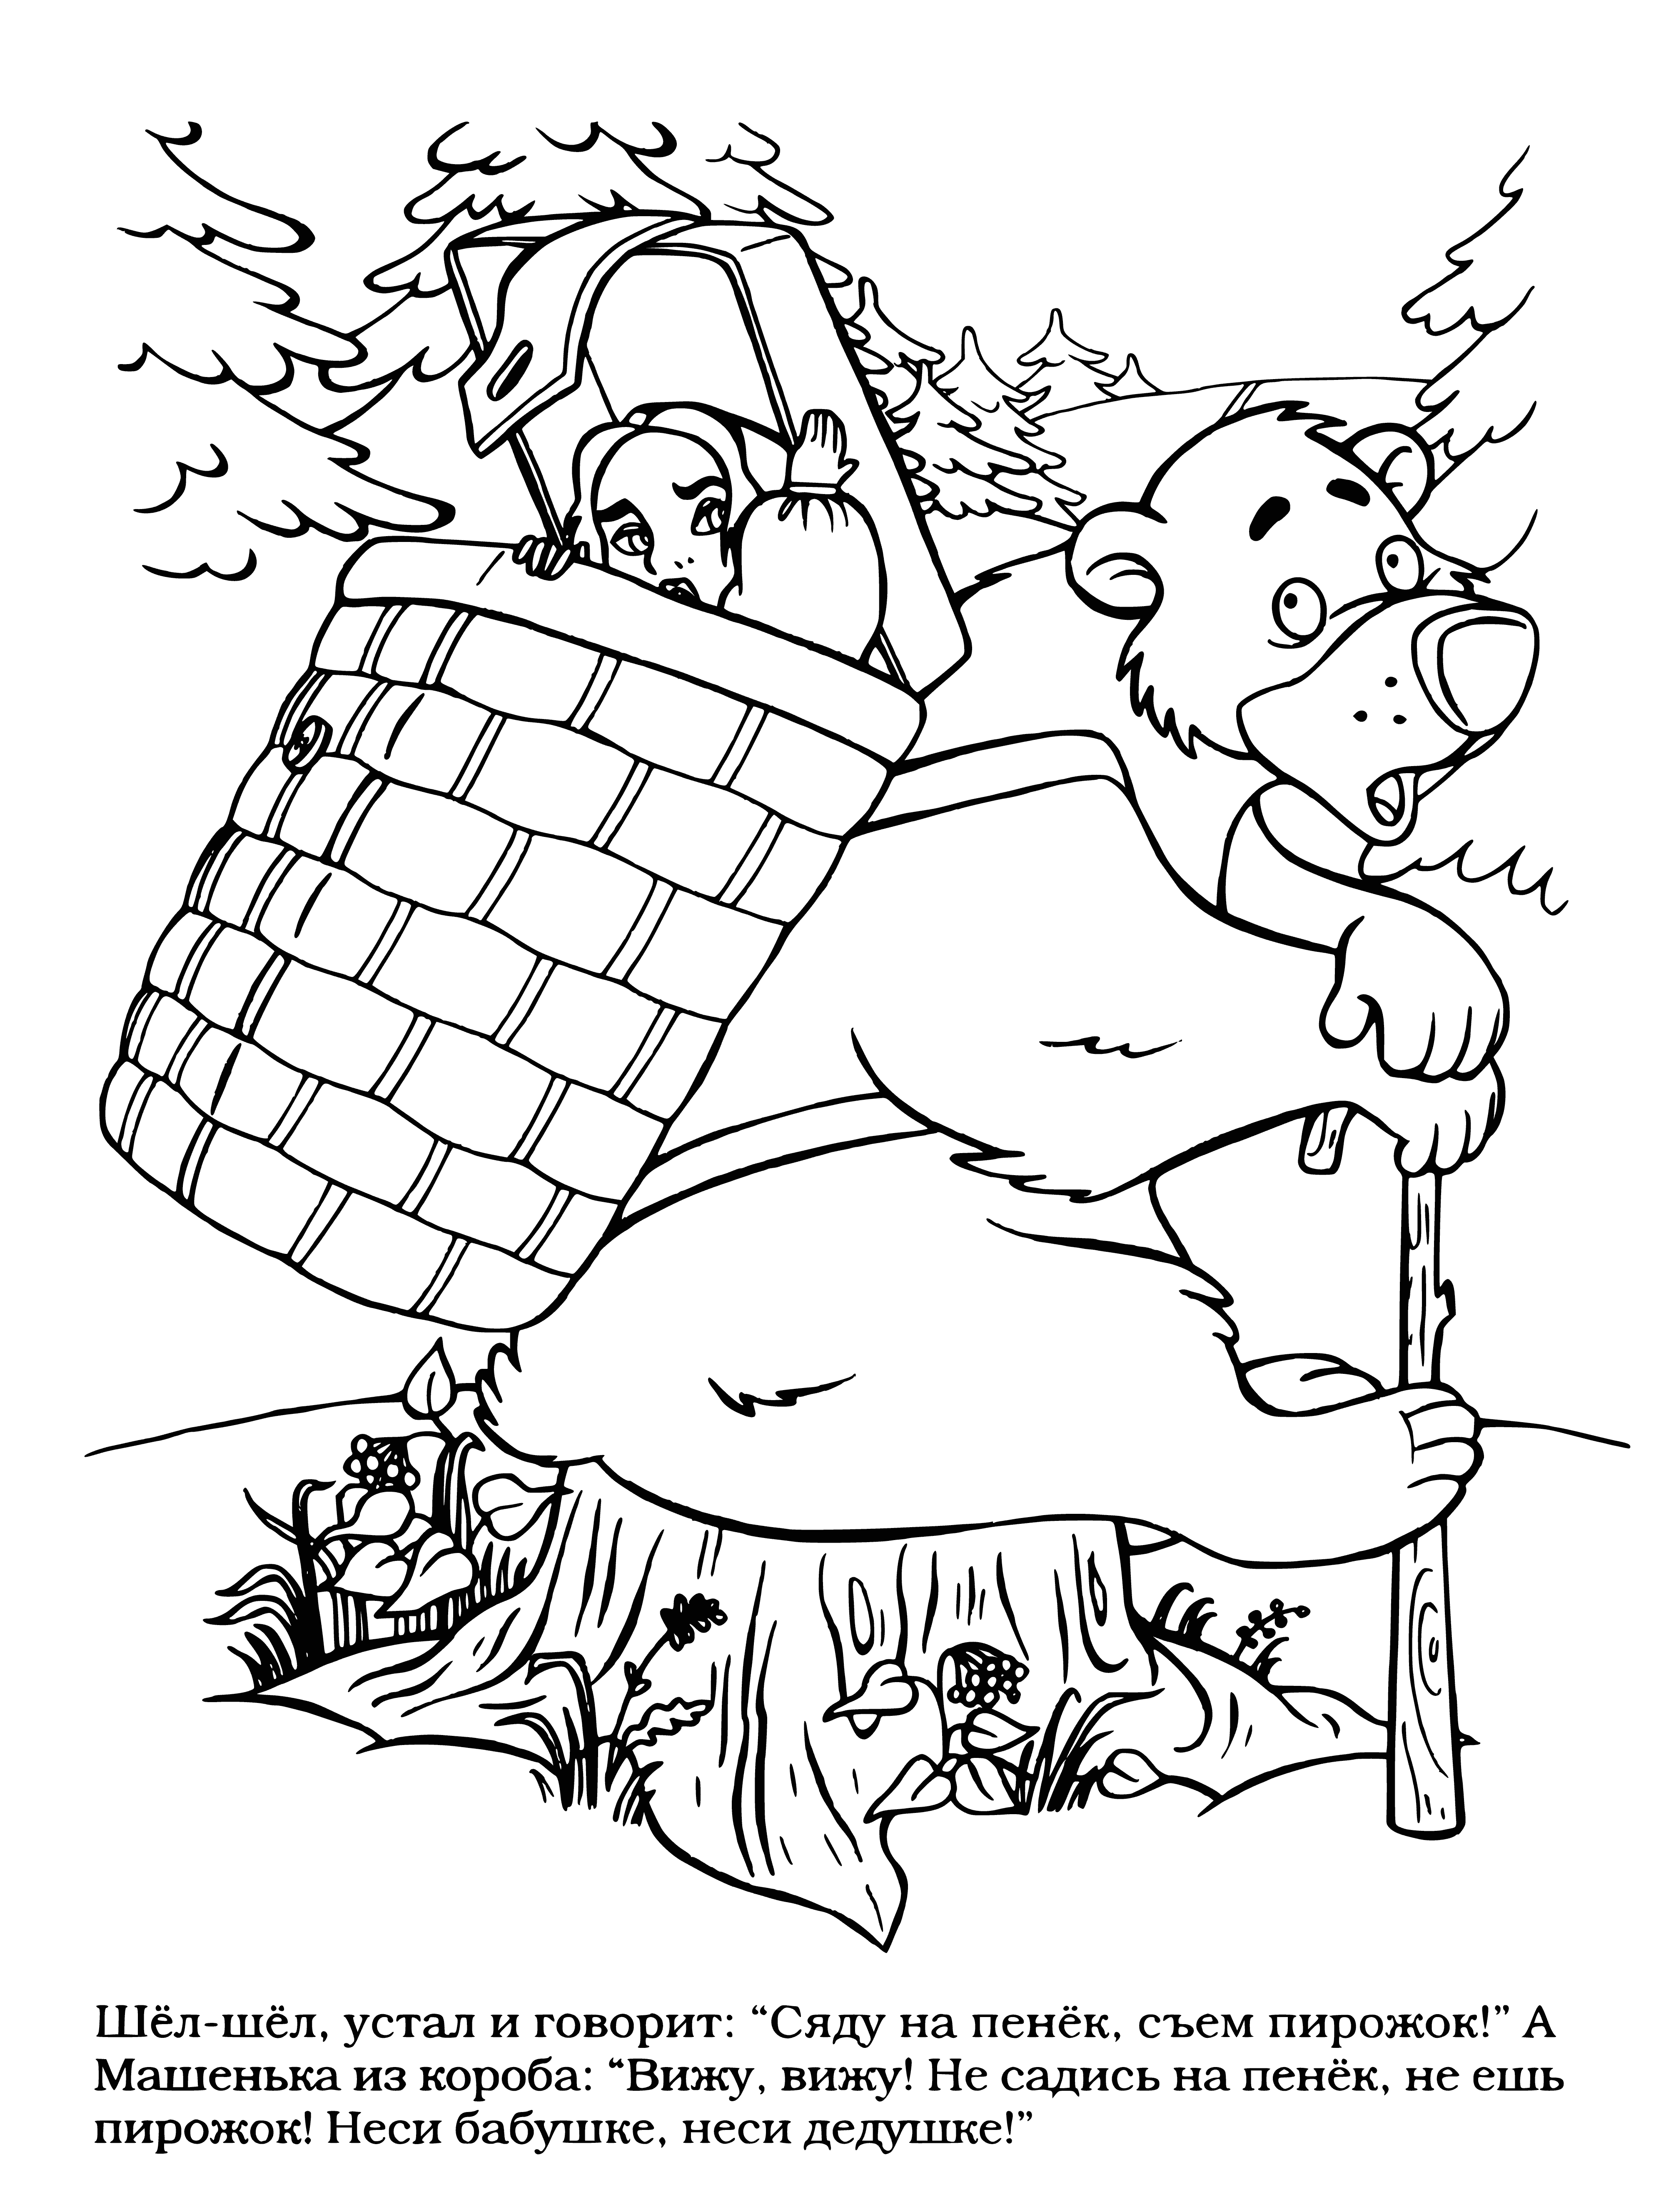 coloring page: Man sits on tree stump, beard & hat, enjoys pie.